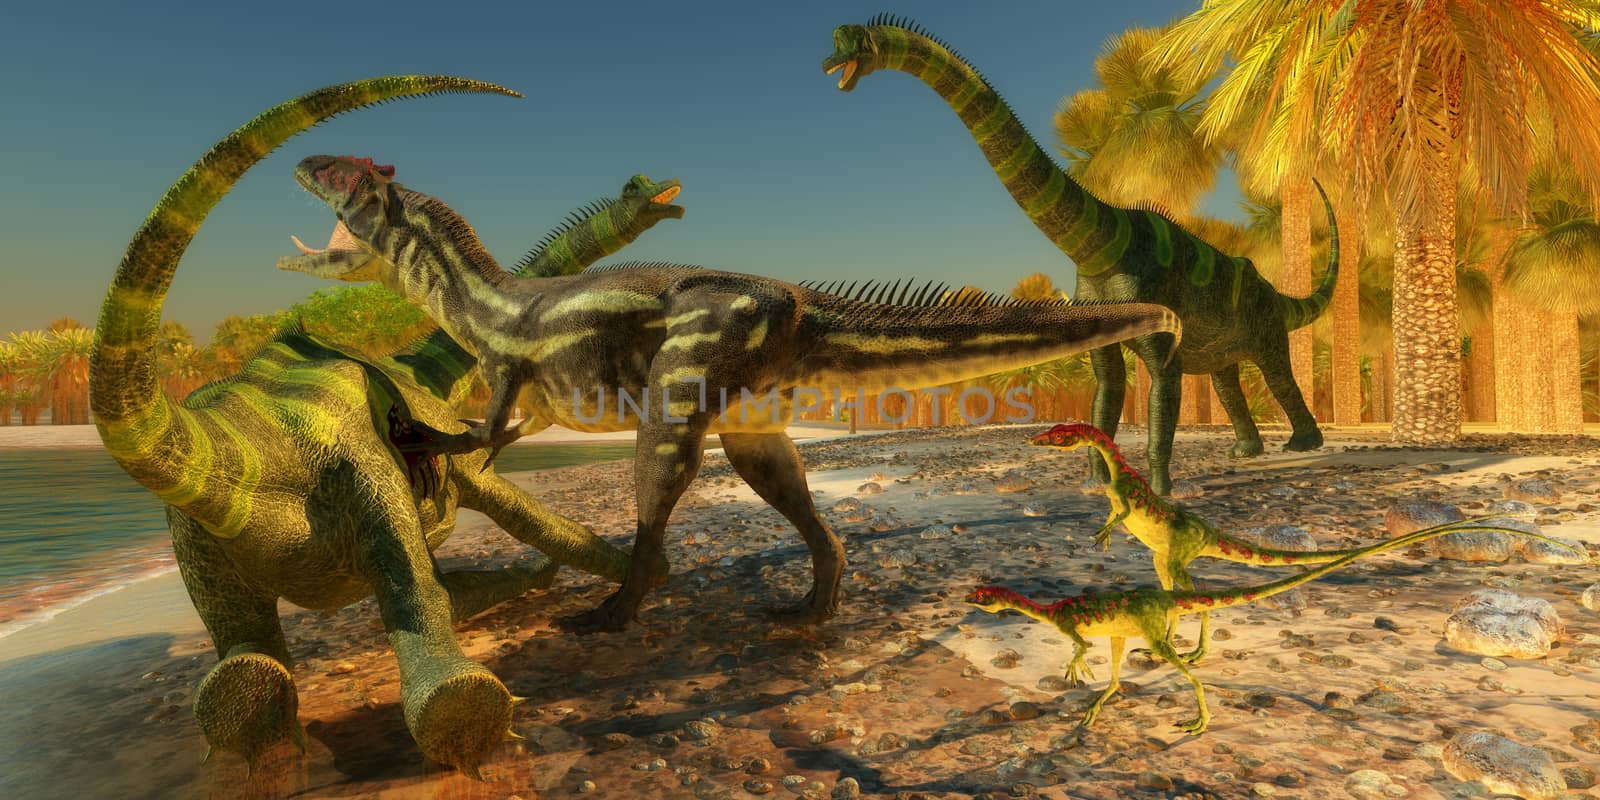 Two Compsognathus wait as an Allosaurus dinosaur brings down a huge Brachiosaurus on the beach.